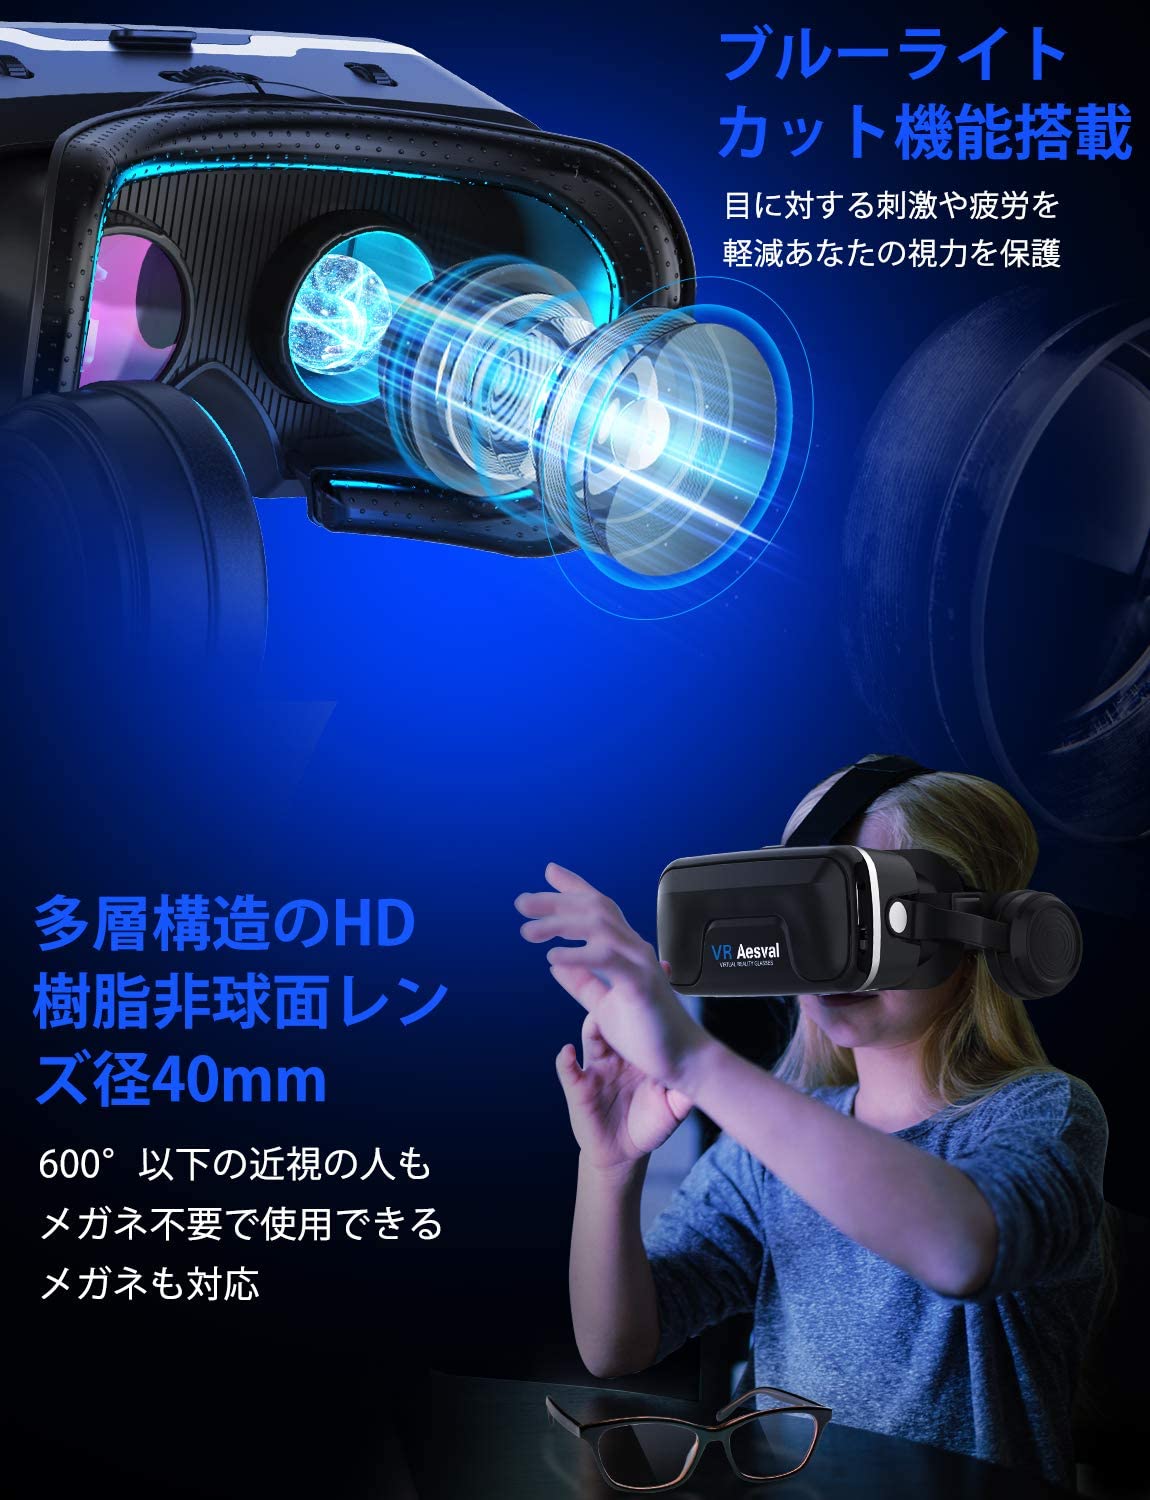 VR ゴーグル スマホ vrゴーグル ヘッドセット 3Dメガネ iPhone